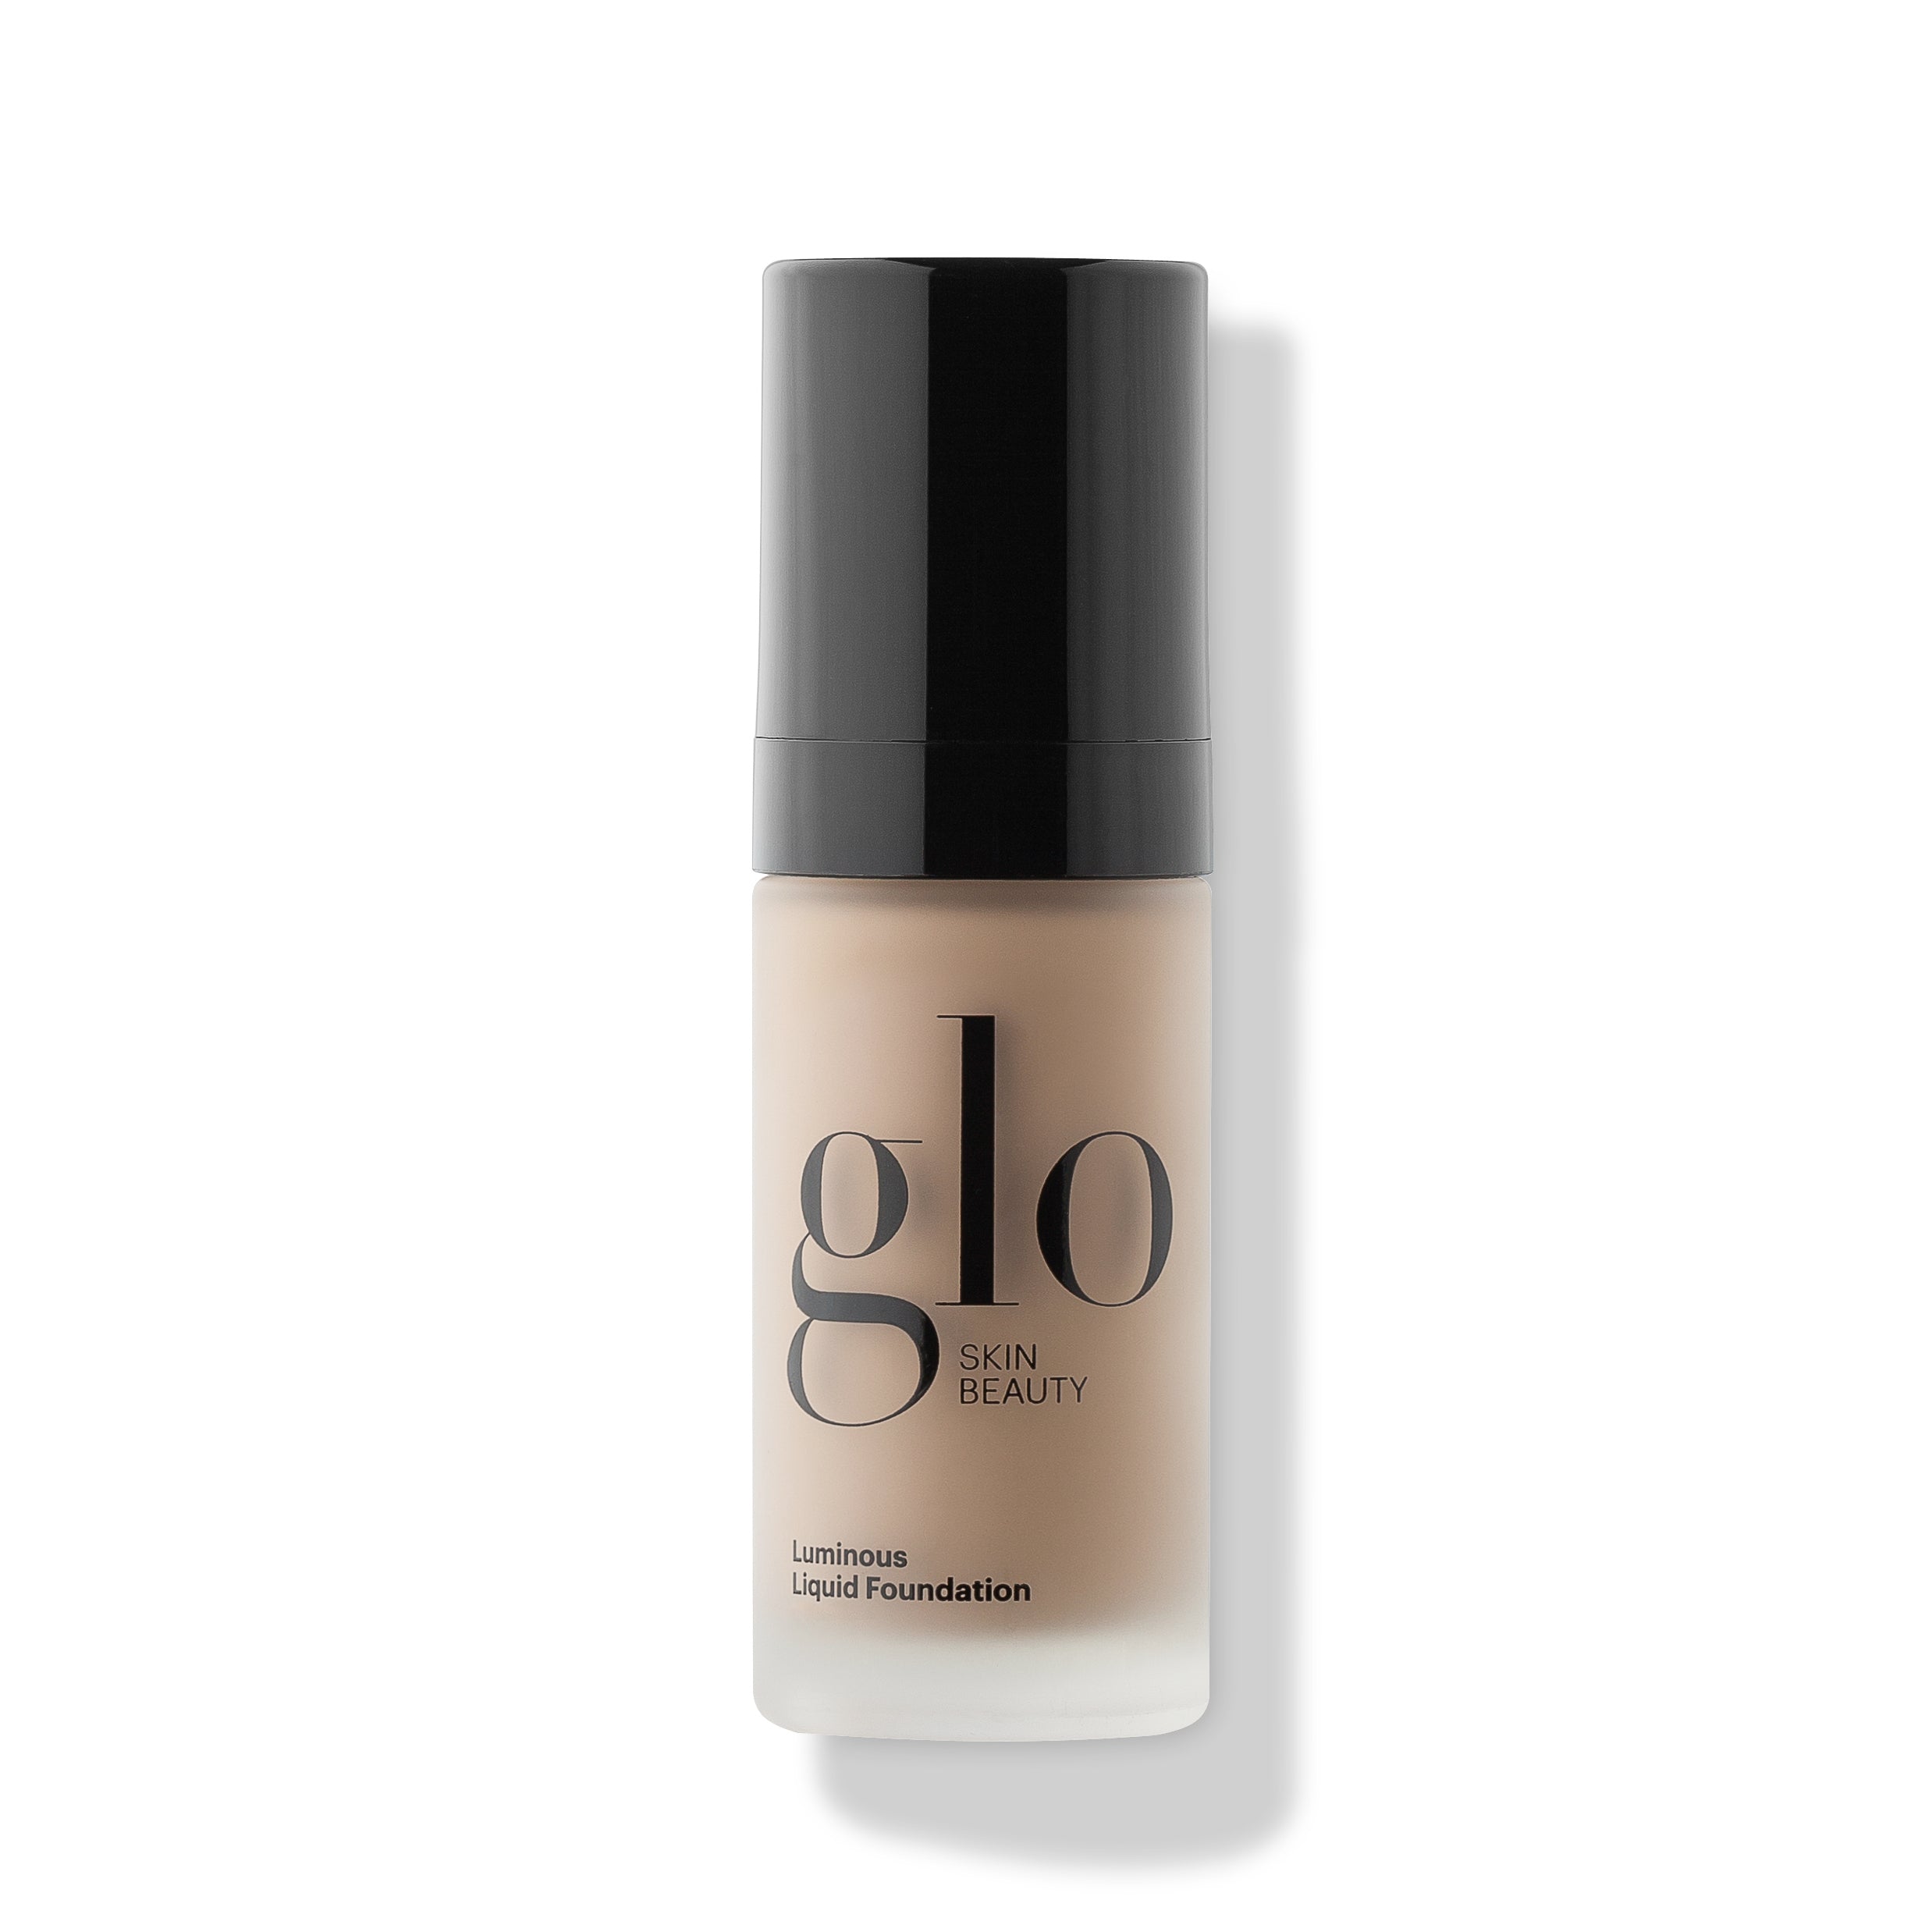 Glo Skin Beauty Luminous Liquid Foundation in Almond